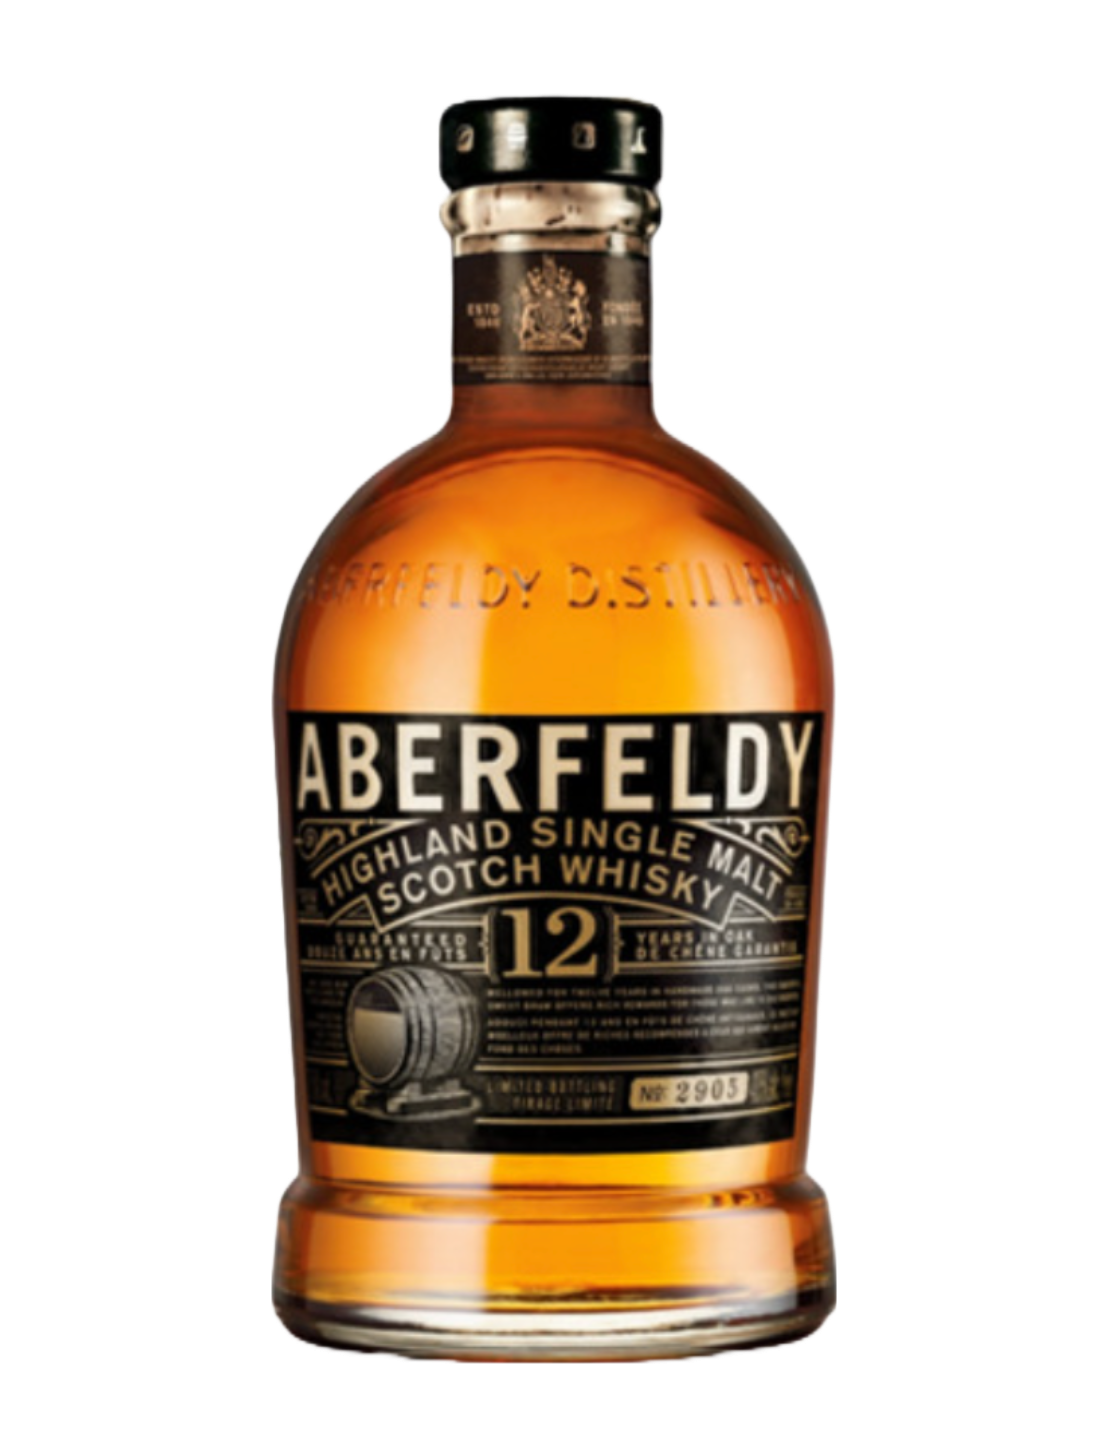 An elegant bottle of Aberfeldy 12-Year-Old Single Malt Scotch Whisky in front of a plain white background